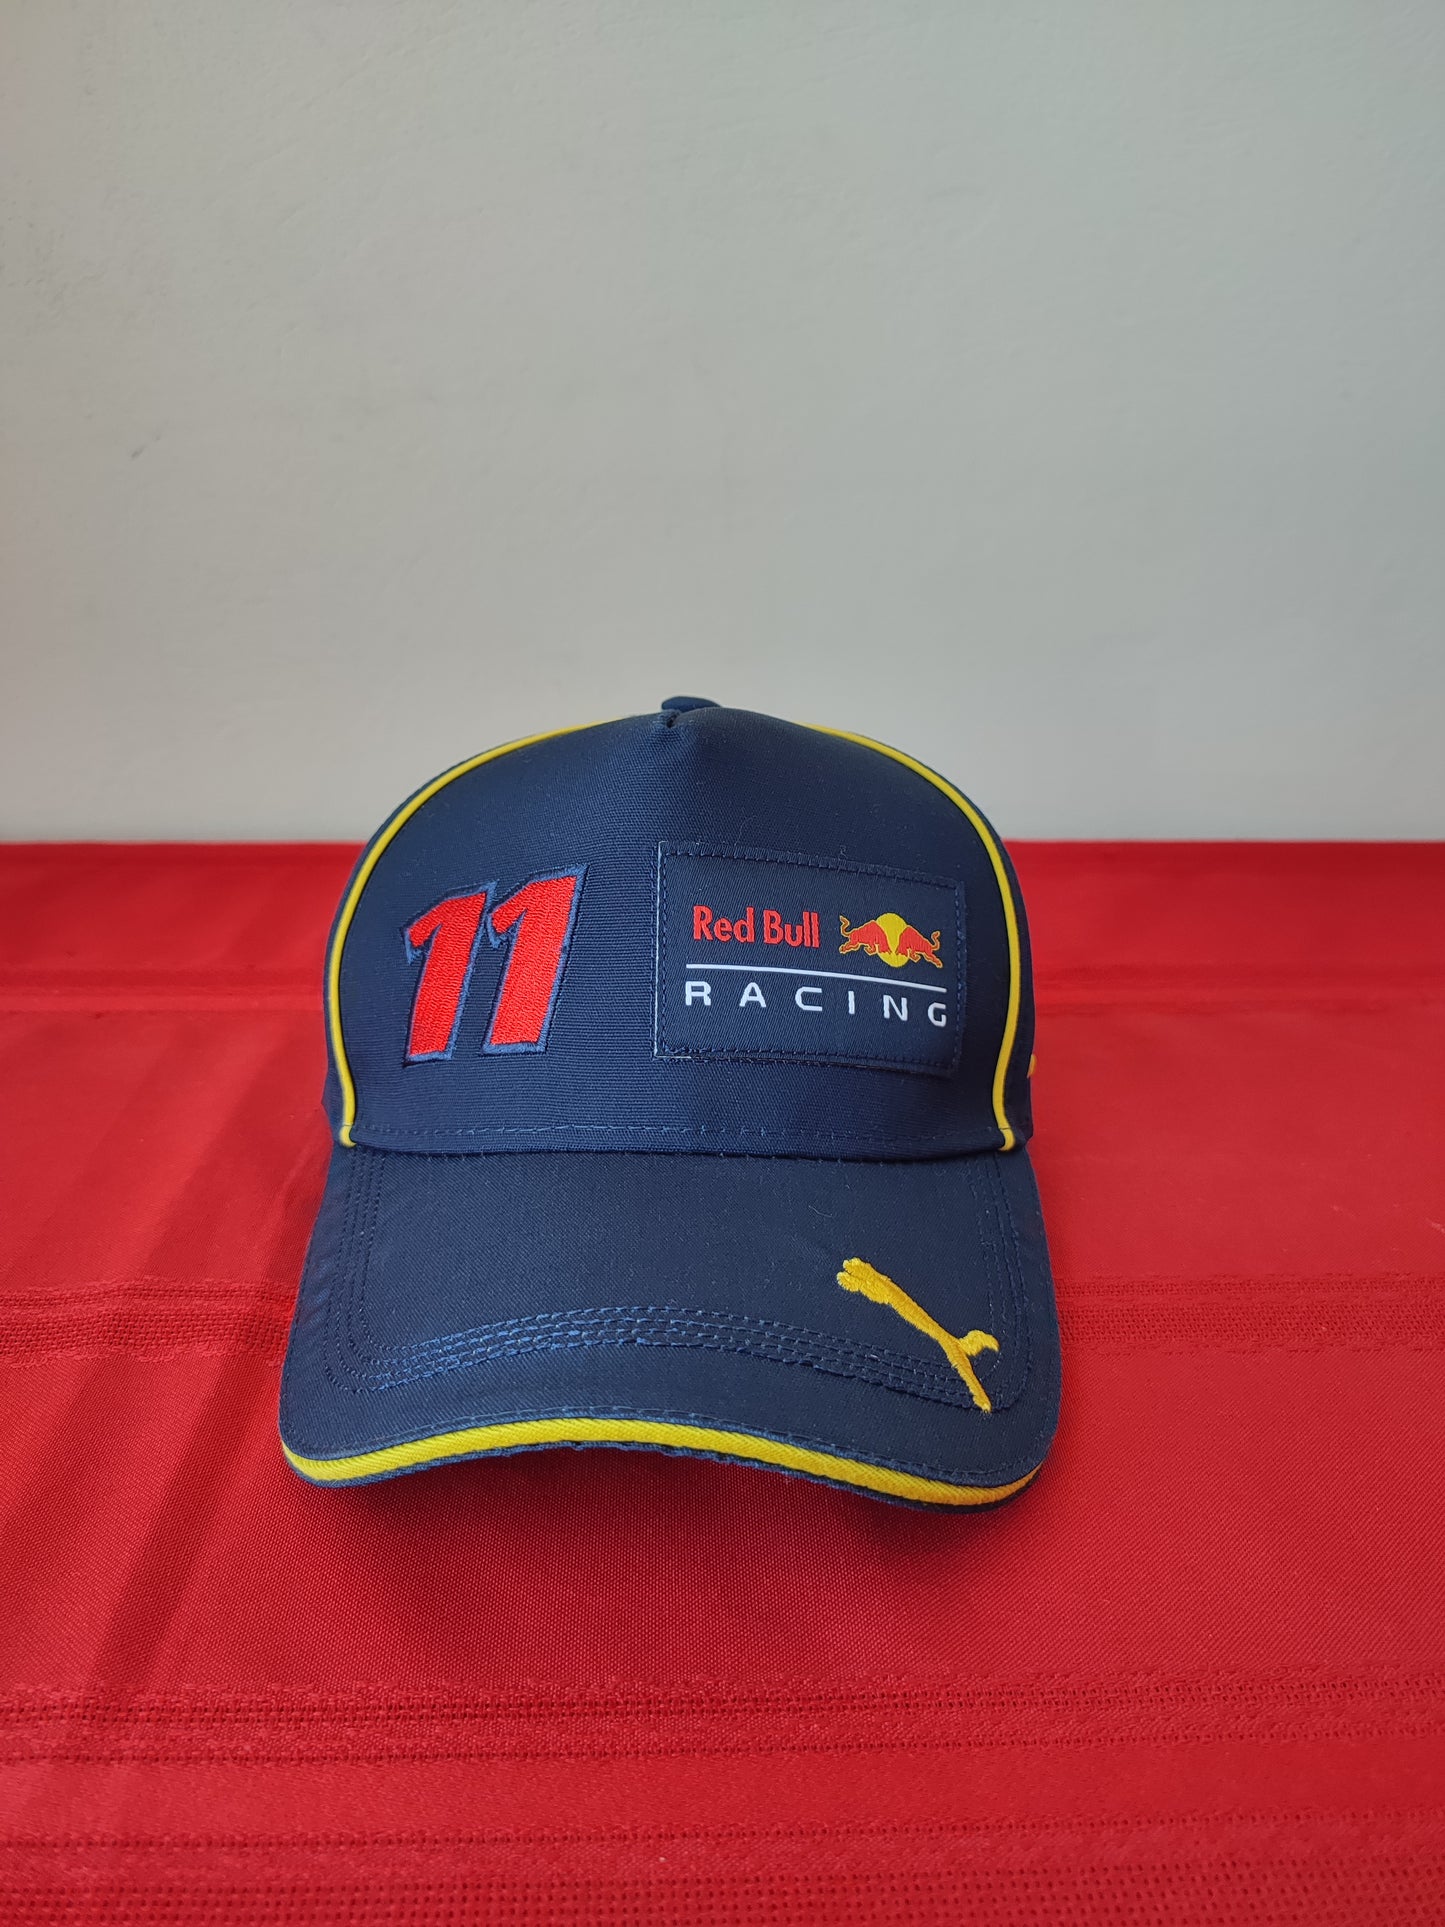 Gorra Red Bull Racing "Checo Pérez" - Equipo F1 (Nuevo)